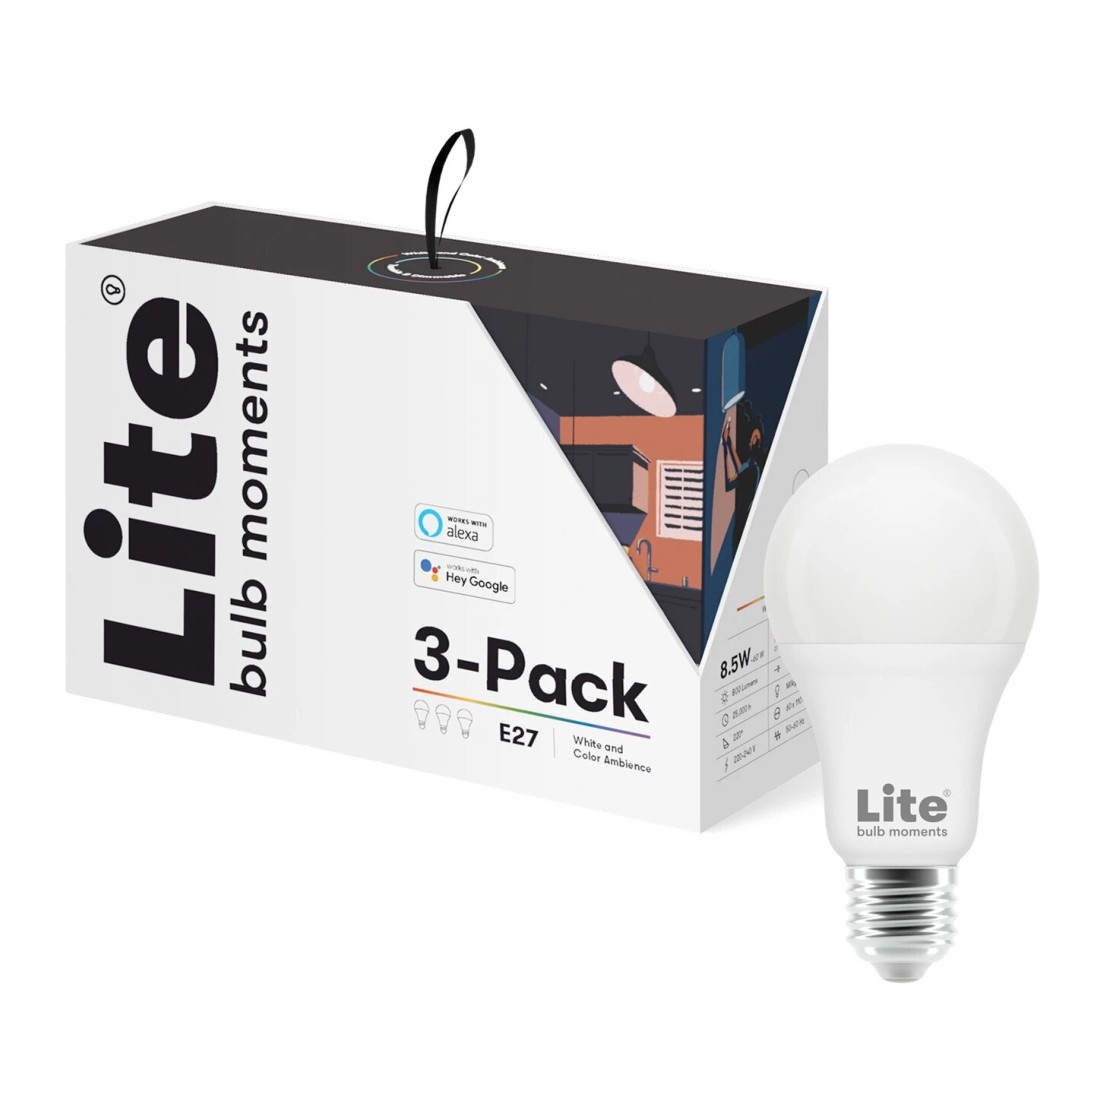 Lite Bulb Moments E27 800 Lumen White And Color Ambience Smart Lightbulb 3-Pack